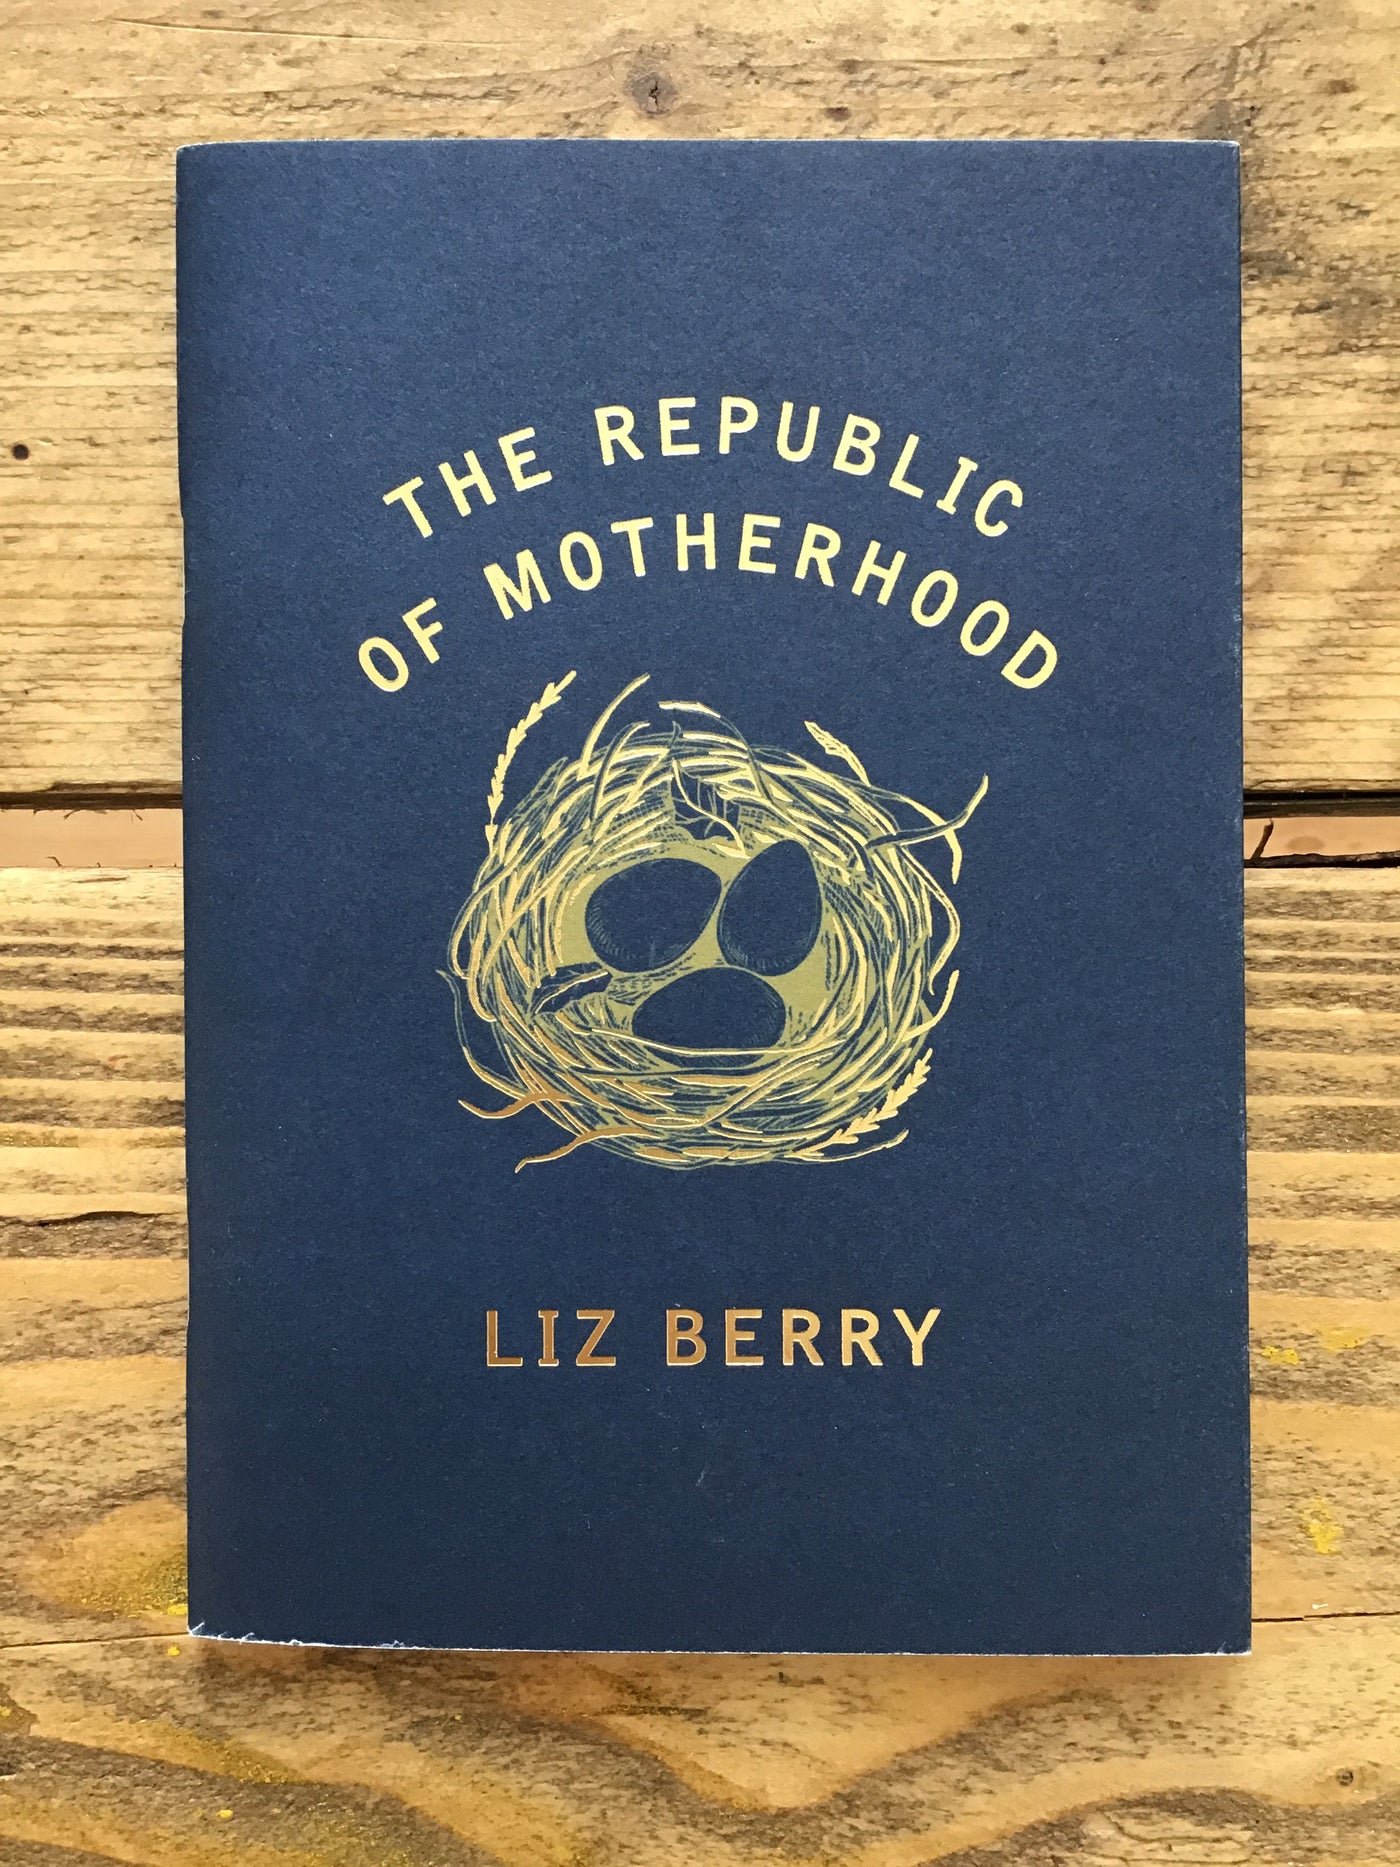 The Republic of Motherhood